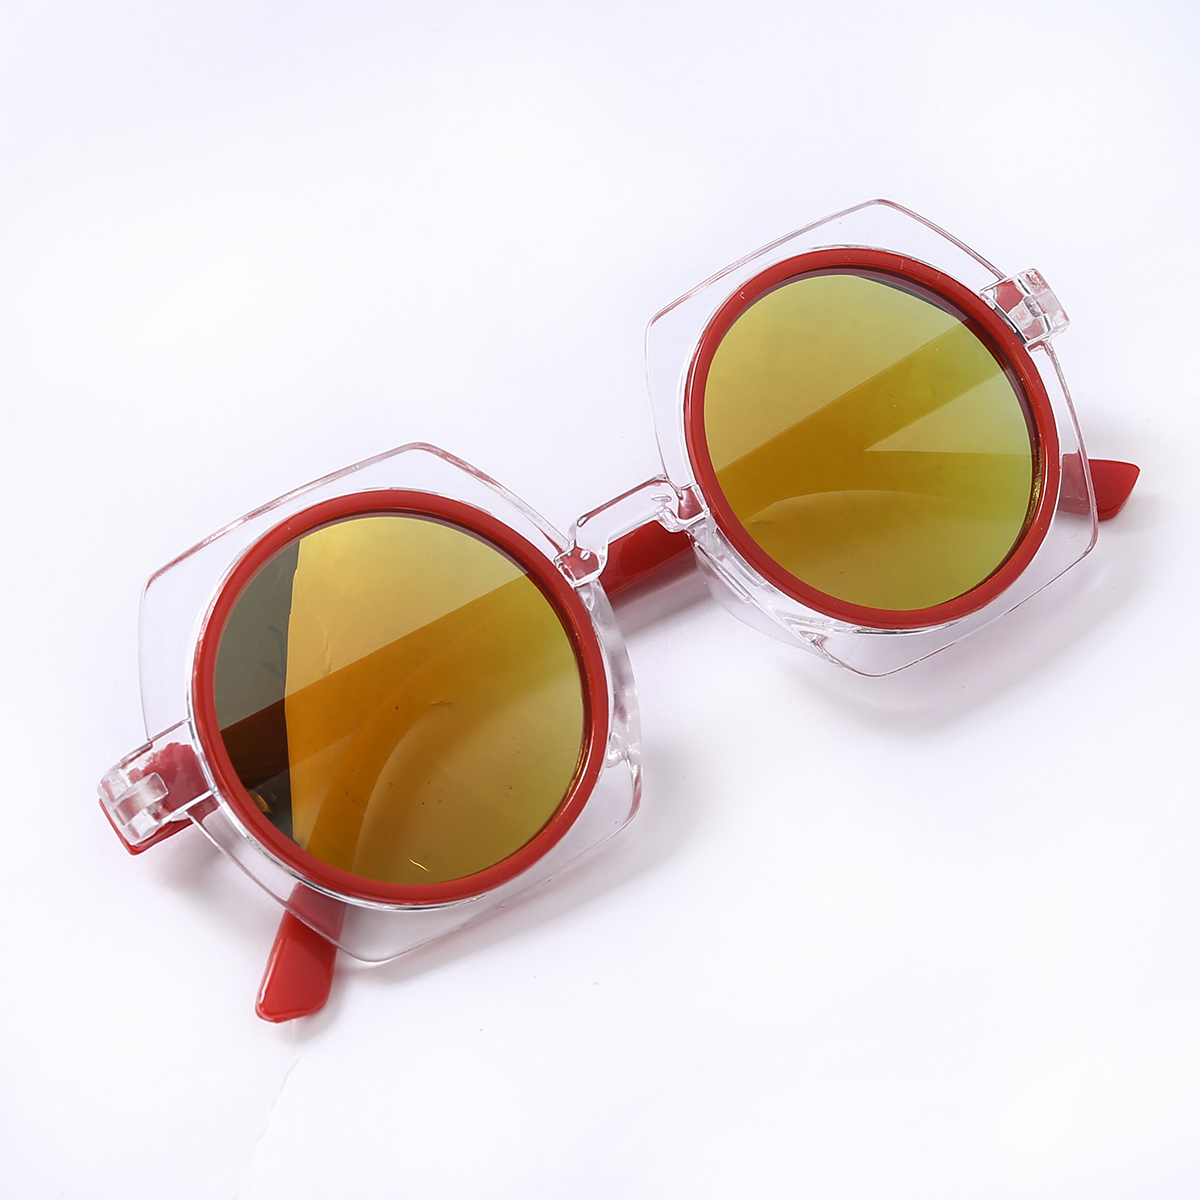 Bmnmsl Kids Vintage Funny Sunglasses Irregular-shaped Anti-UV Shades Glasses - image 3 of 6